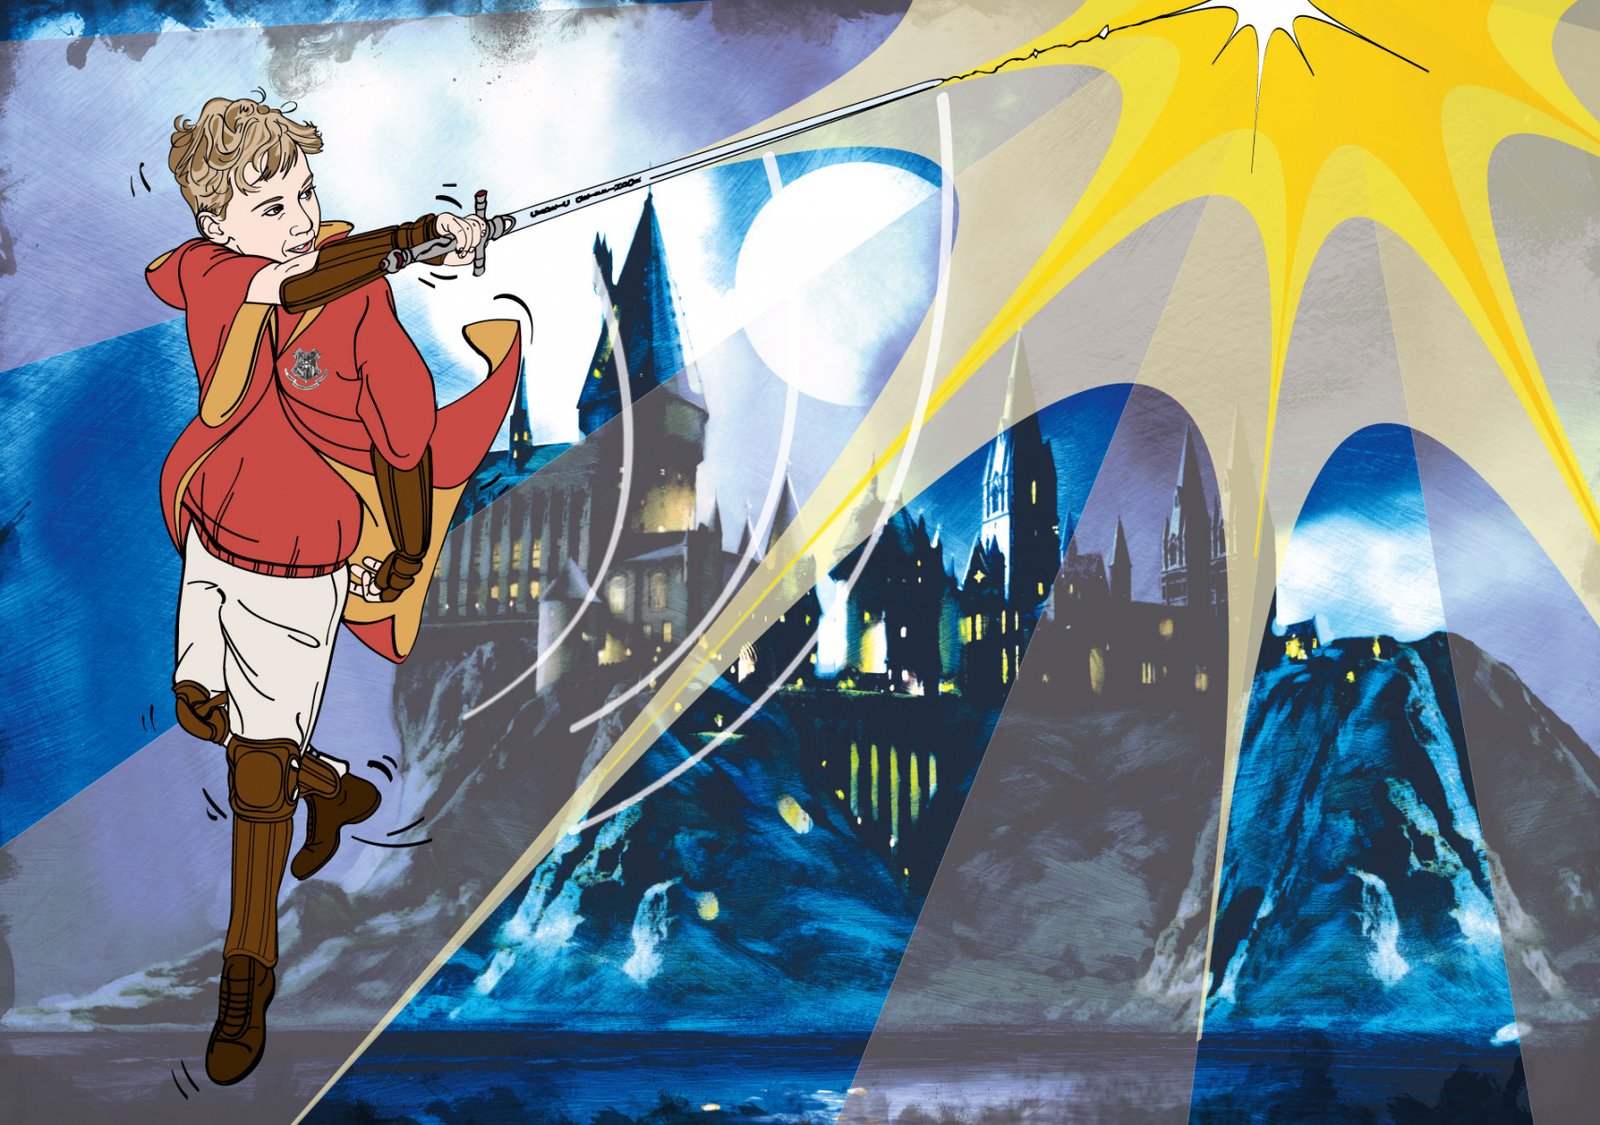 Harry Potter style illustration commission